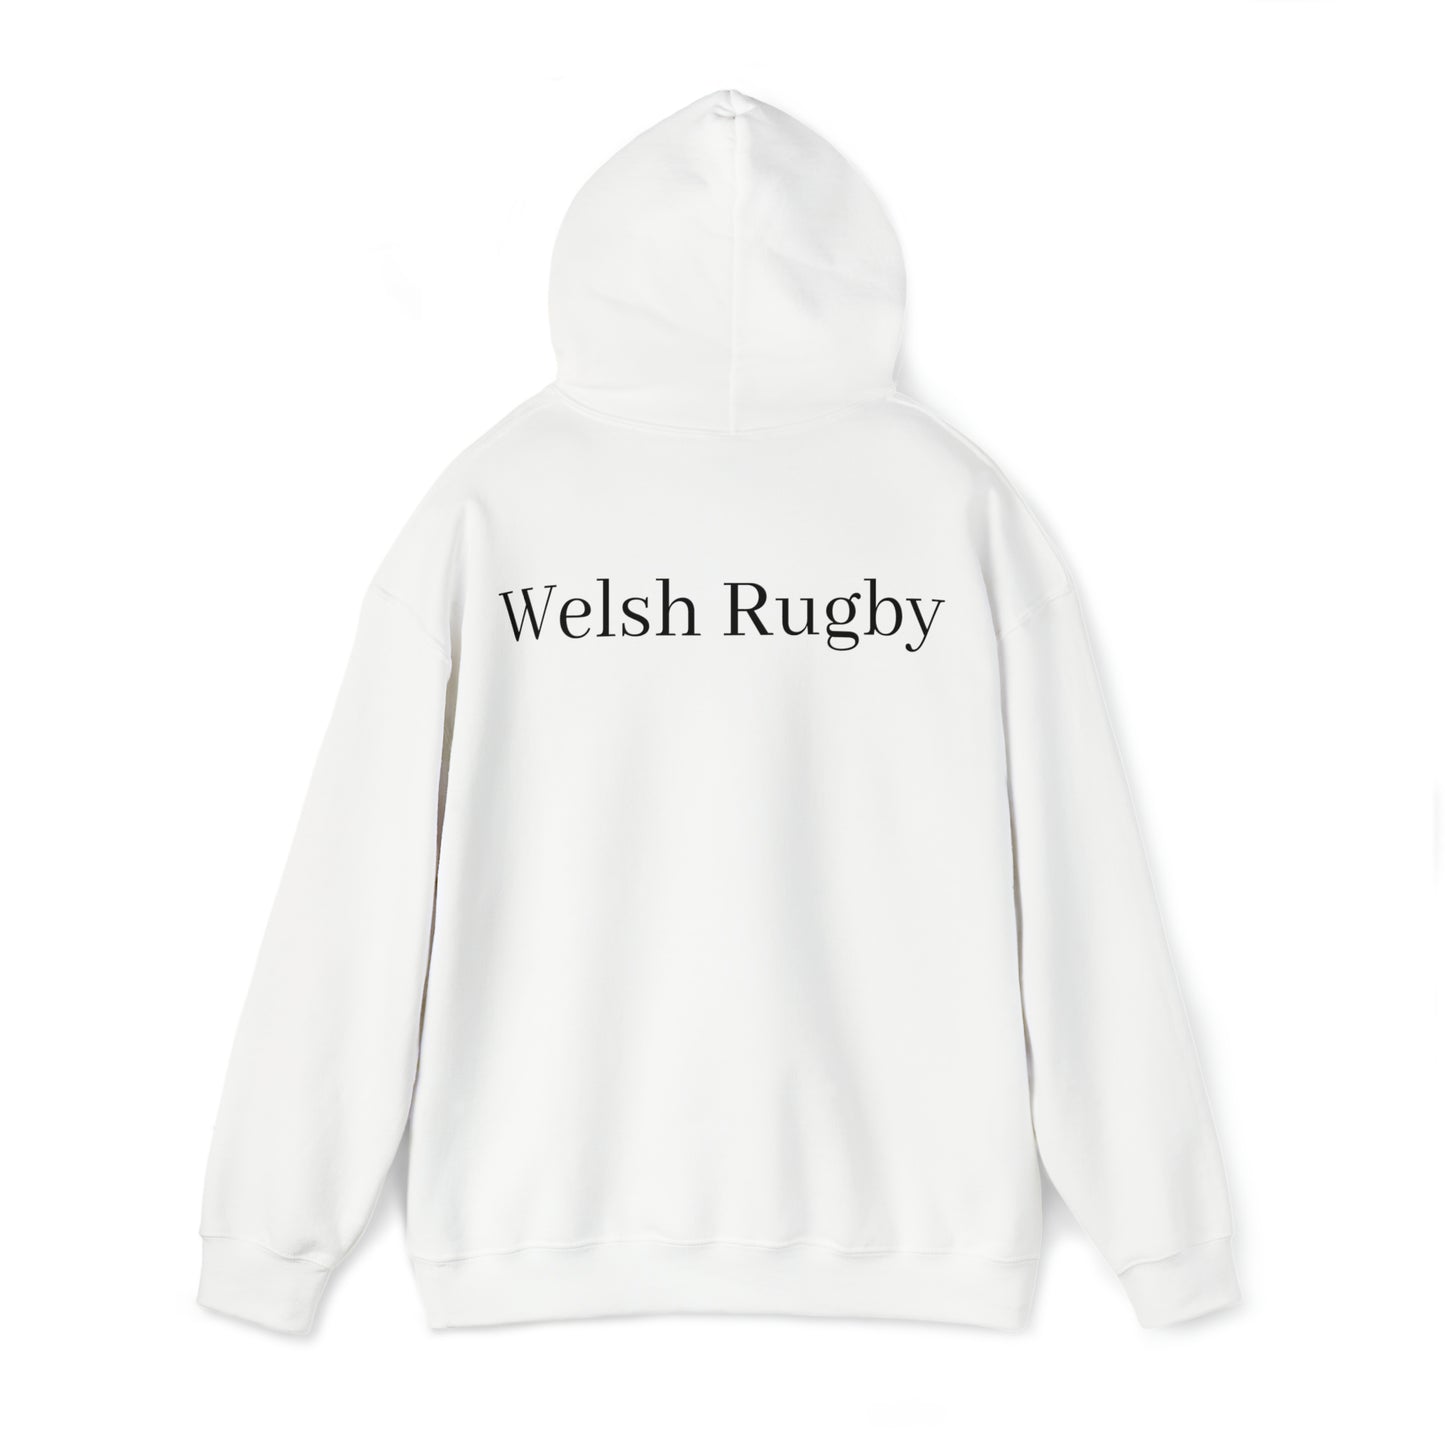 Ready Wales - light hoodies